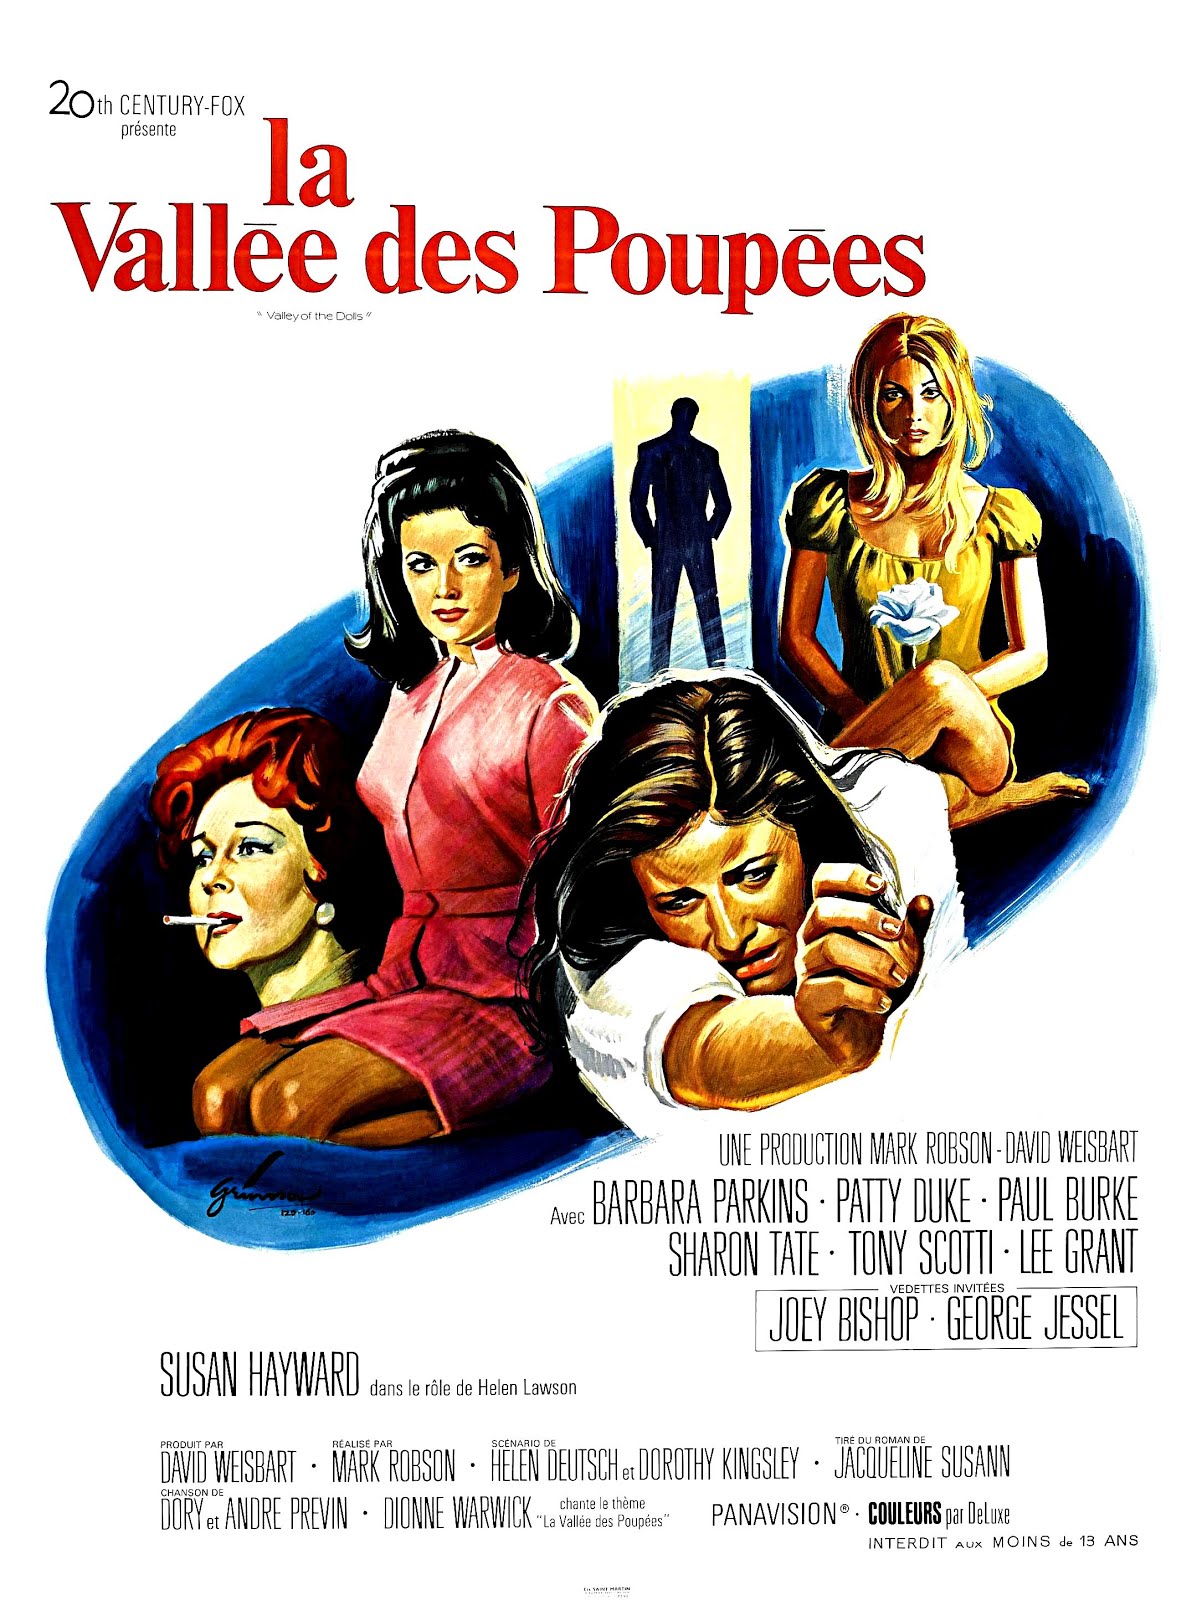 La vallée des poupées (1967) Mark Robson - Valley of the dolls (17.02.1967 / 05.1967)